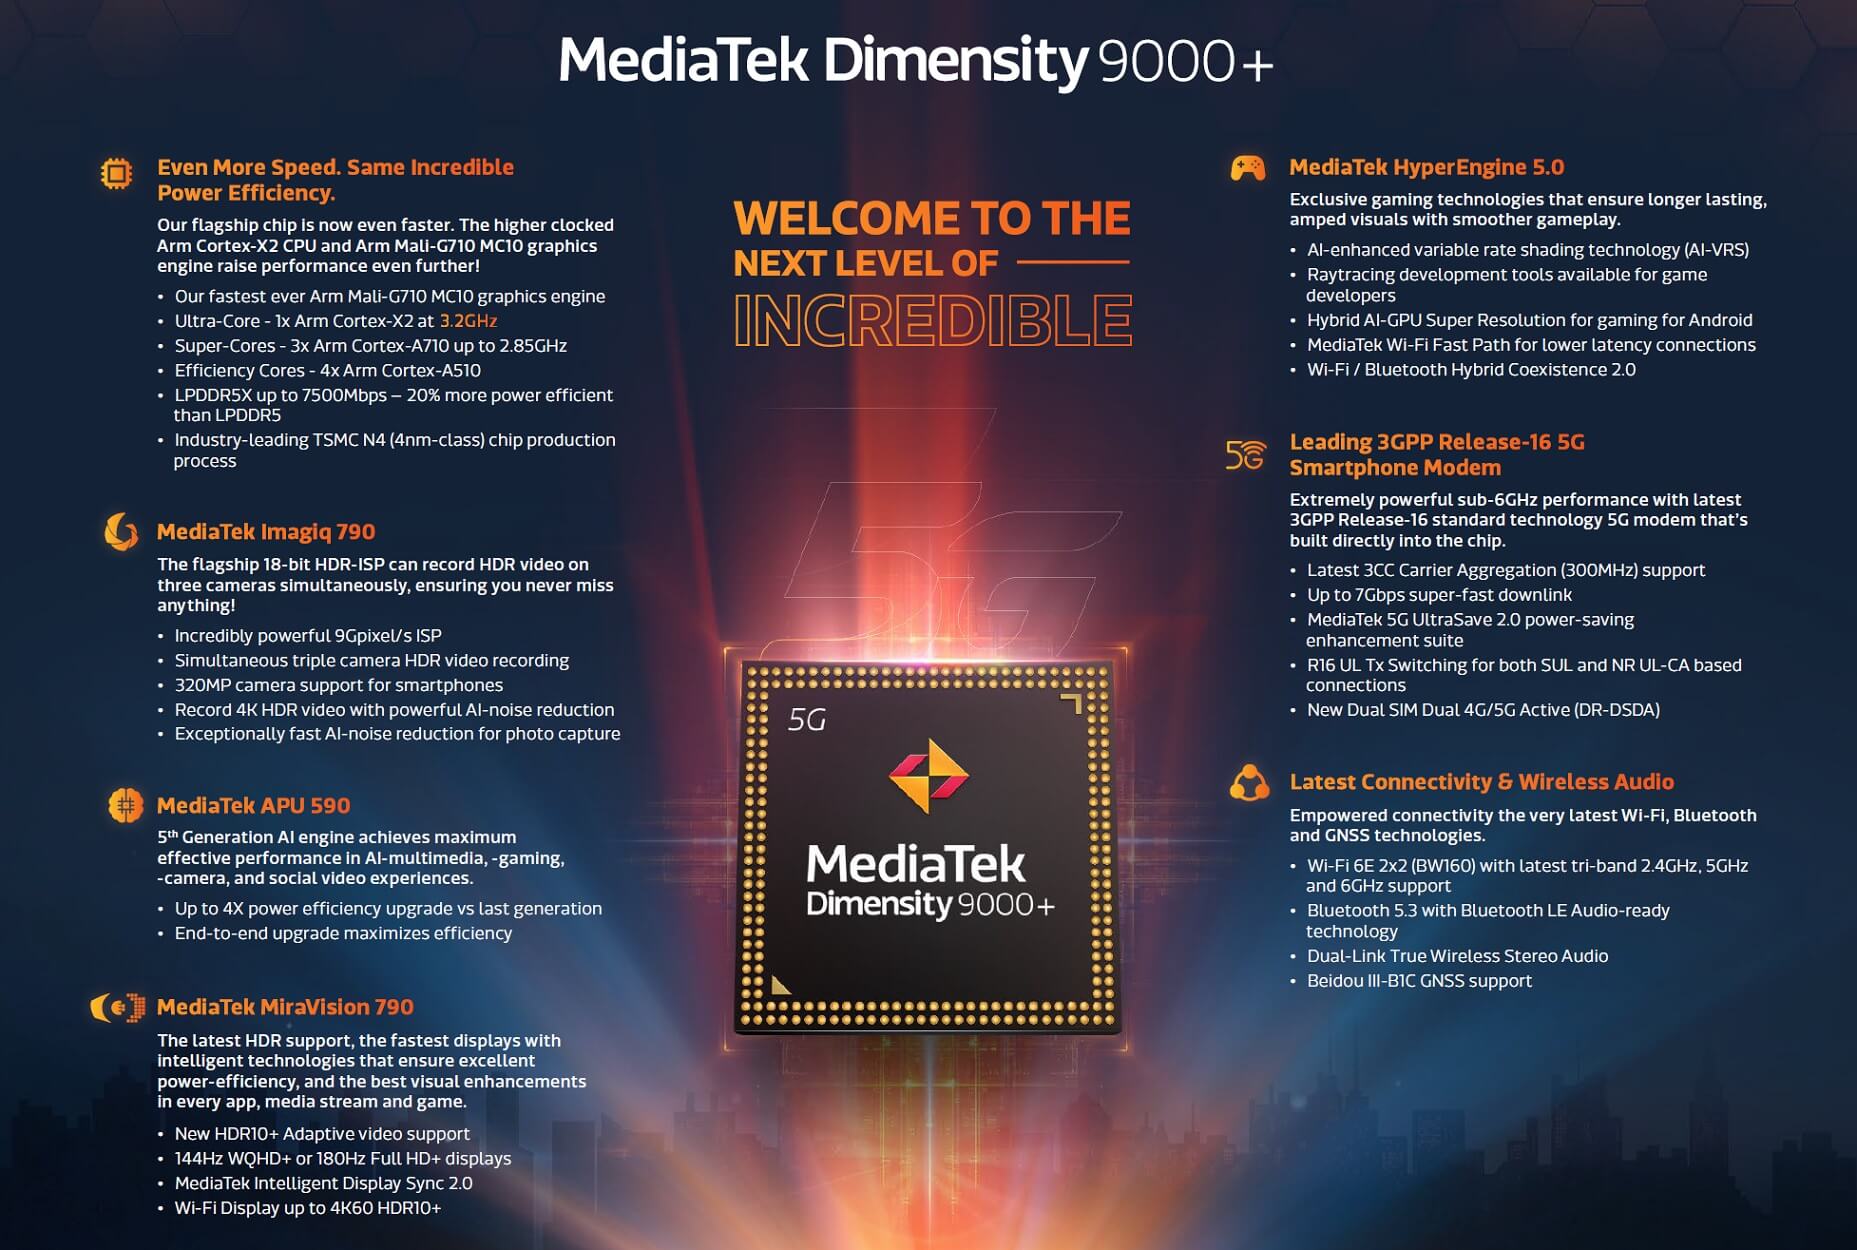 MediaTek Dimensity 9000 Plus features